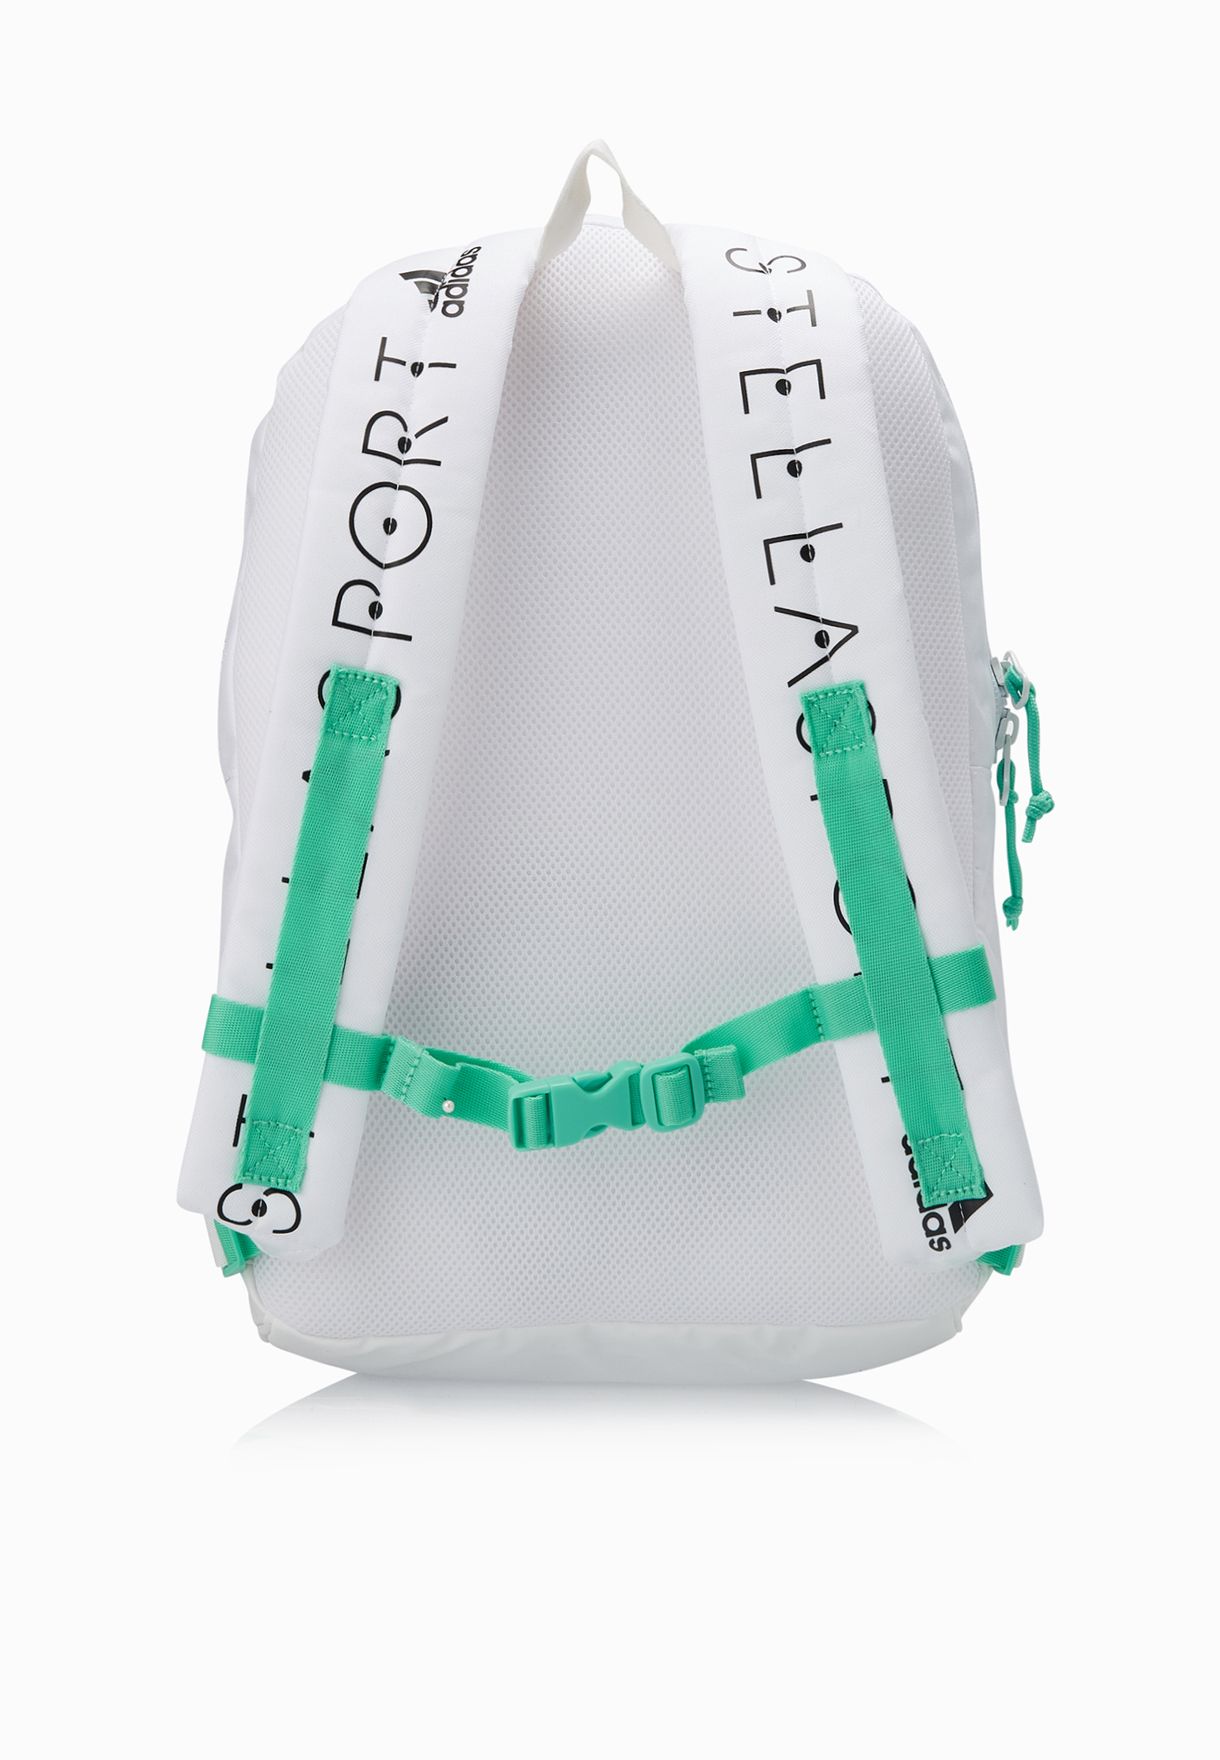 adidas stellasport backpack